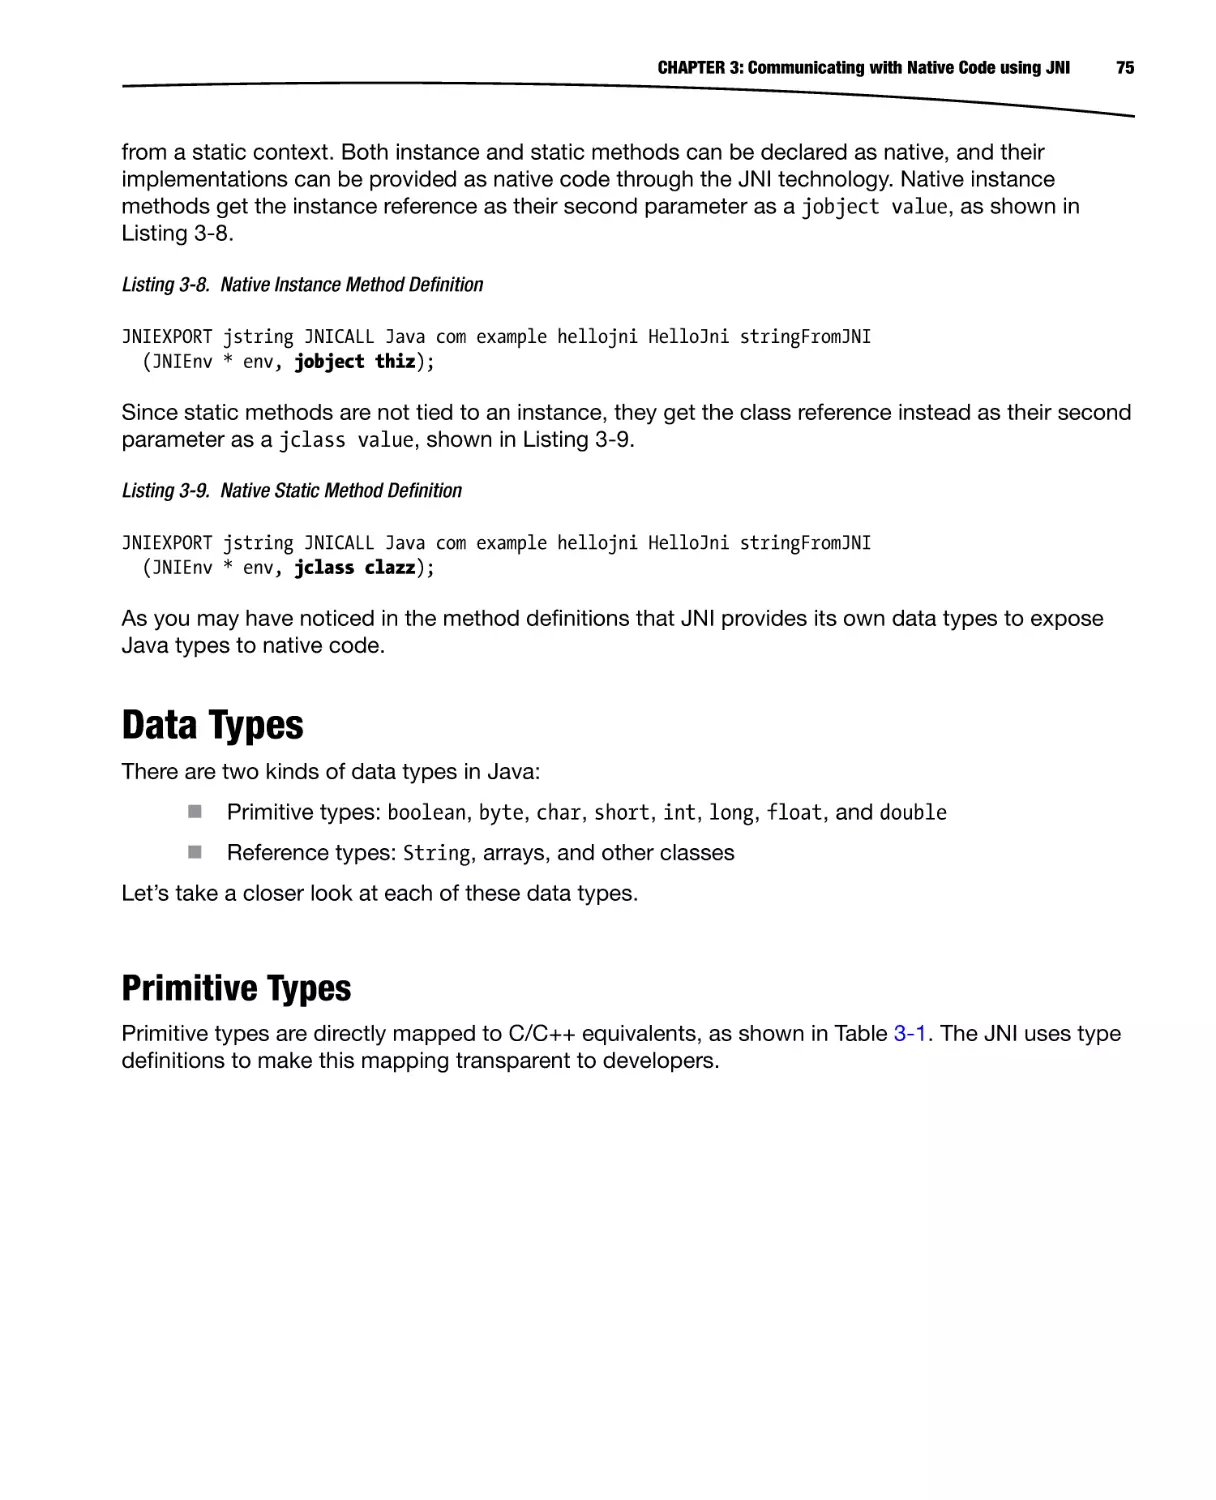 Data Types
Primitive Types